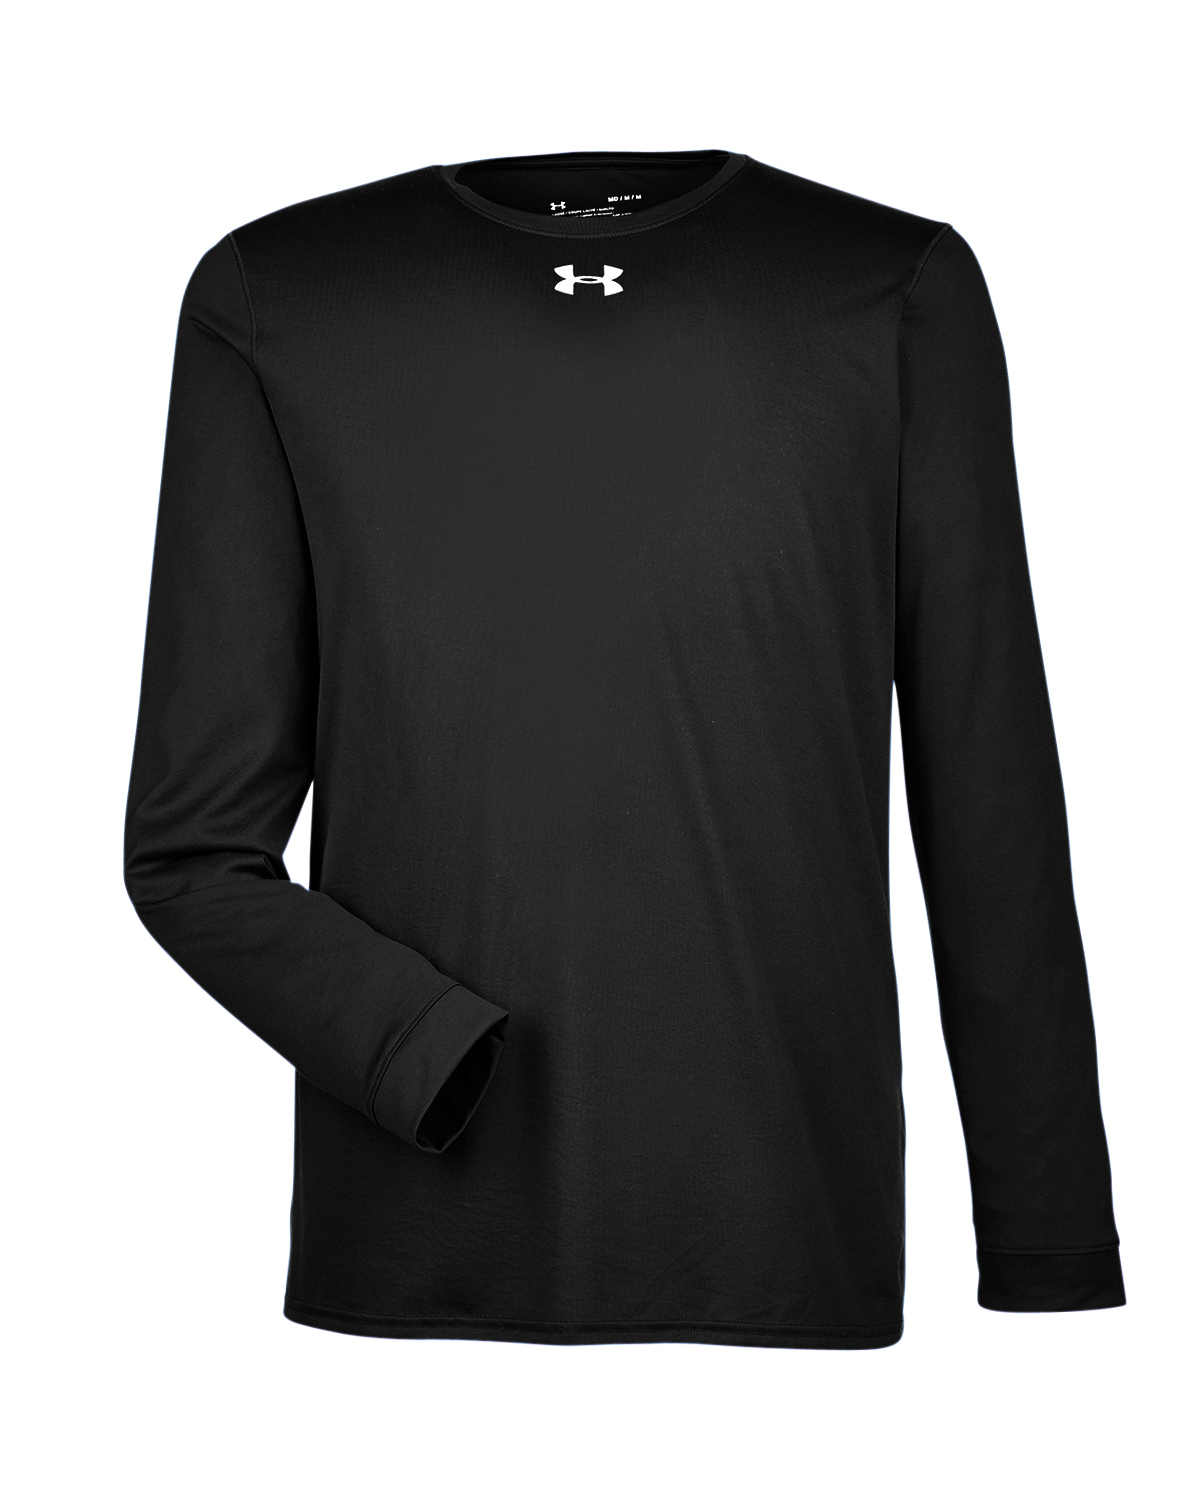 Under Armour 1305776 Men's UA Tech Locker 2.0 T-Shirt Long Sleeve Athletic Tee 